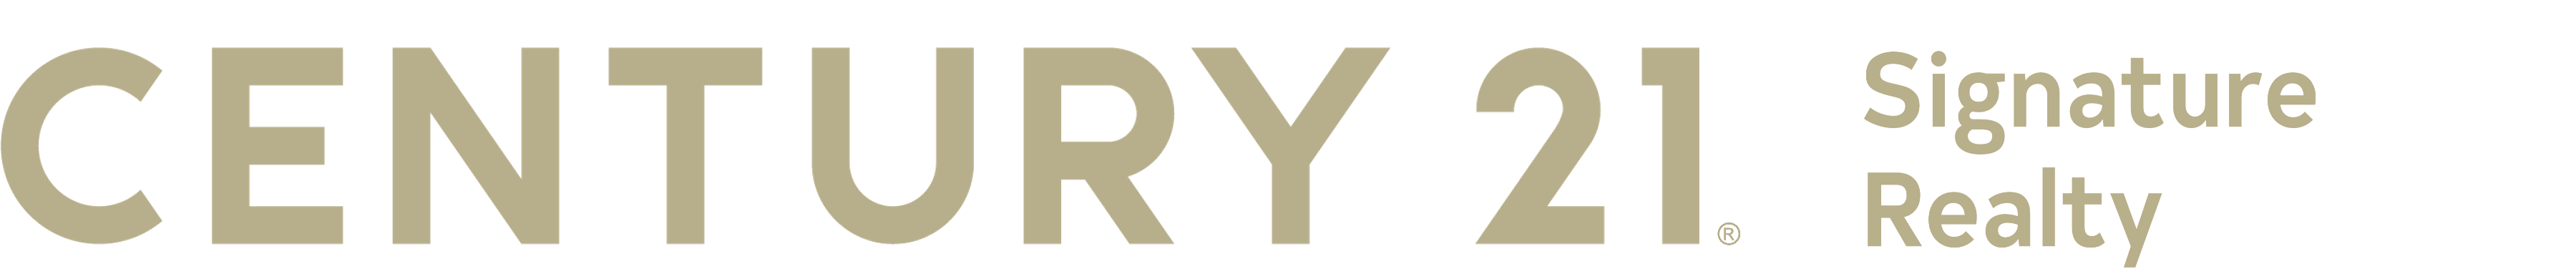 century 21 gold logo